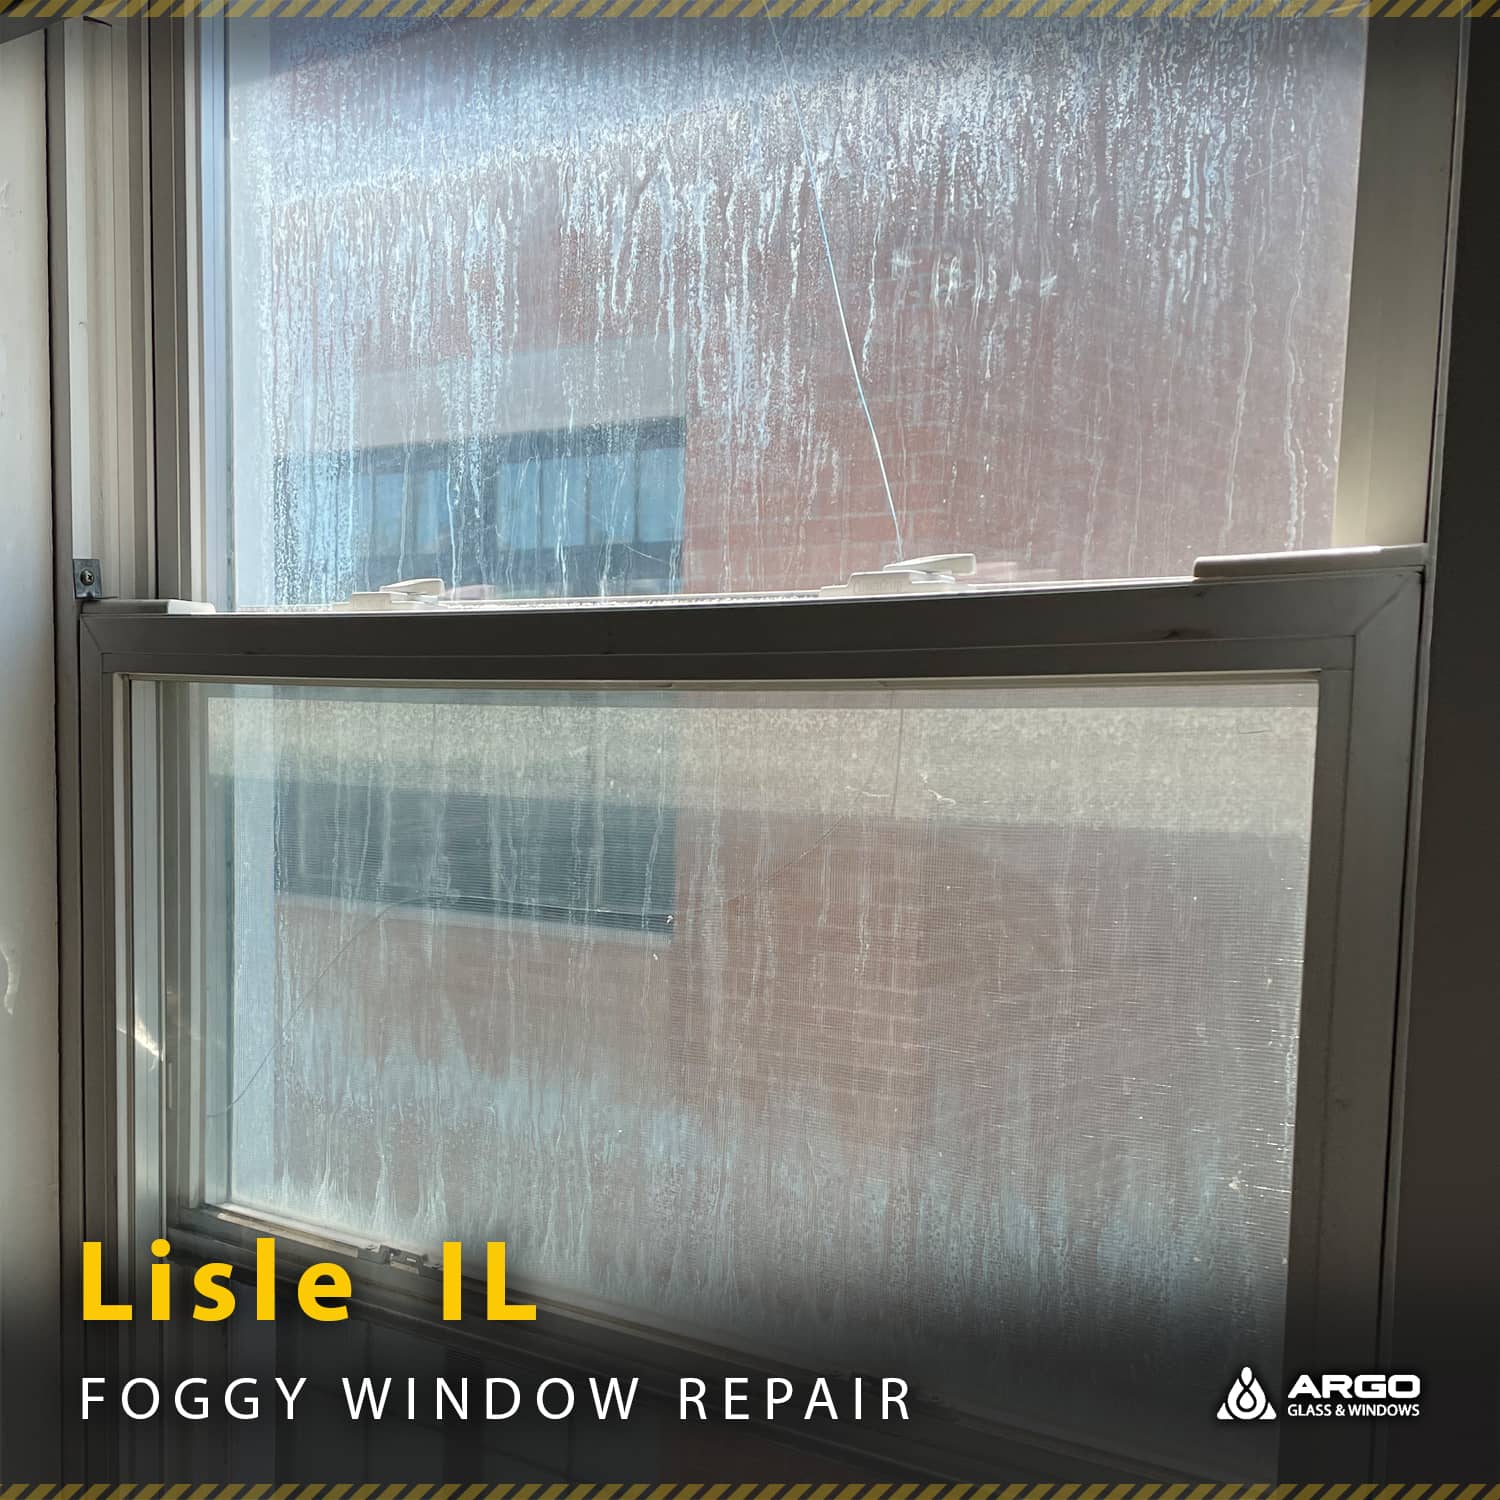 Professional Foggy Window Repair company